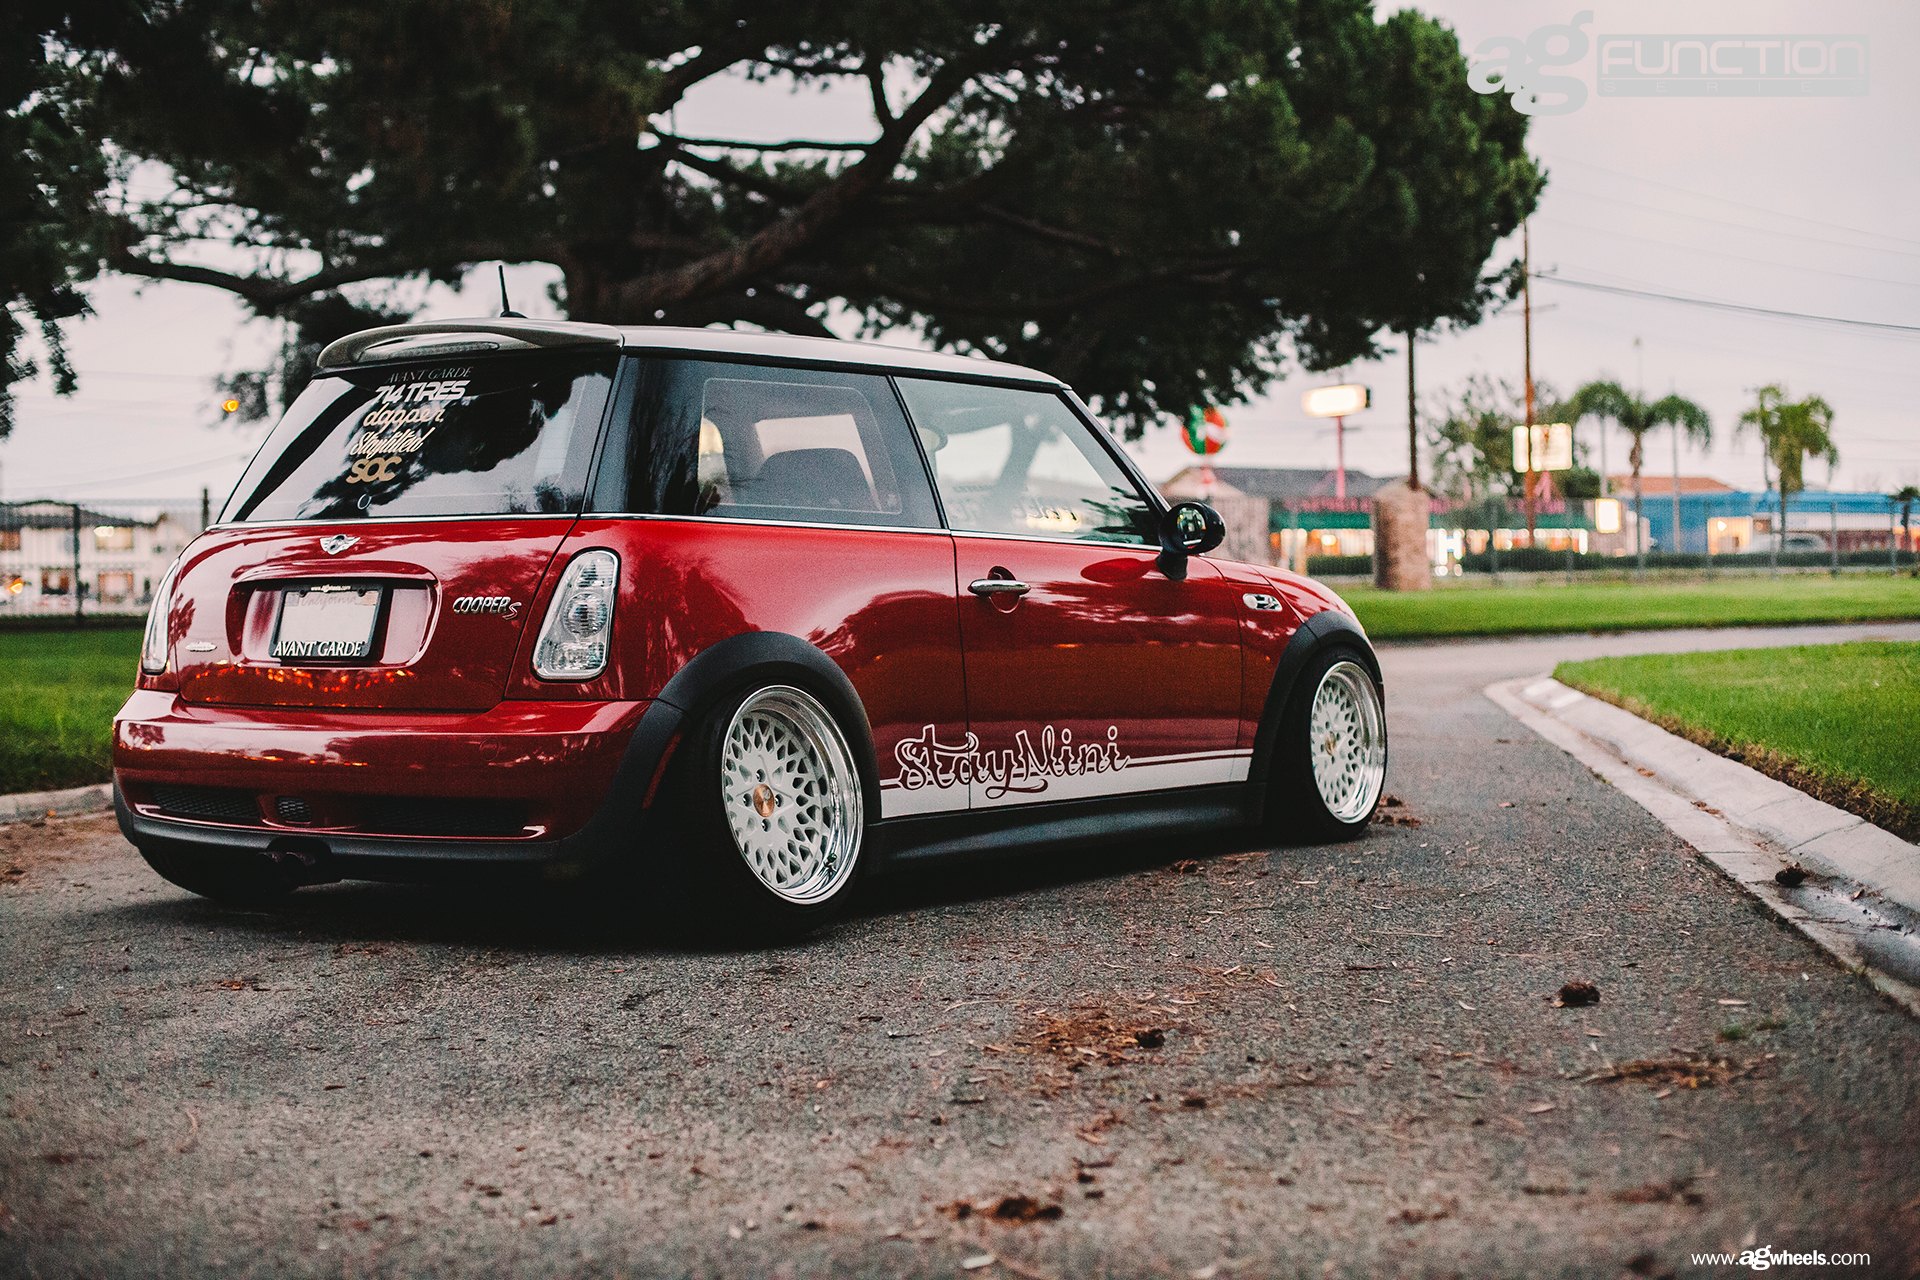 Roofline Spoiler on Custom Red Mini Cooper - Photo by Avant Garde Wheels